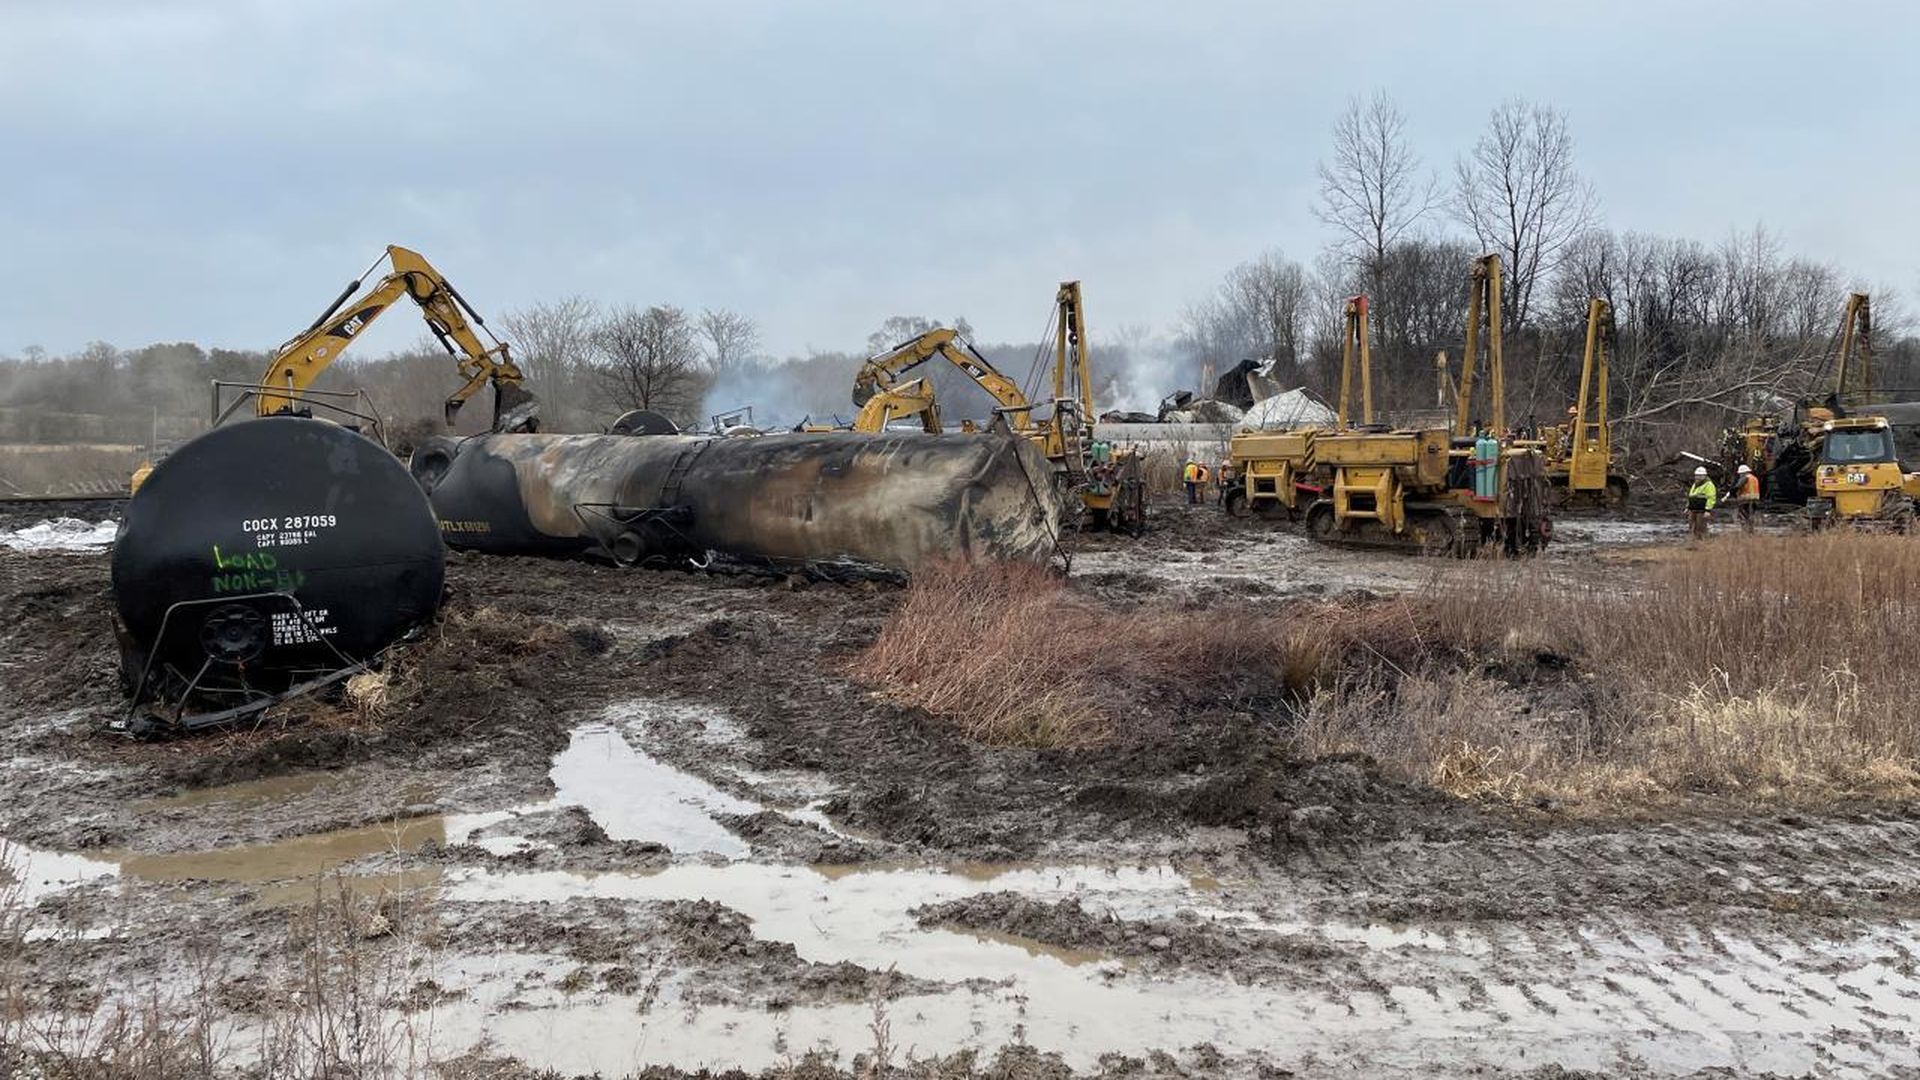 The site of the train derailment in East Palestine, Ohio, on Feb. 17.